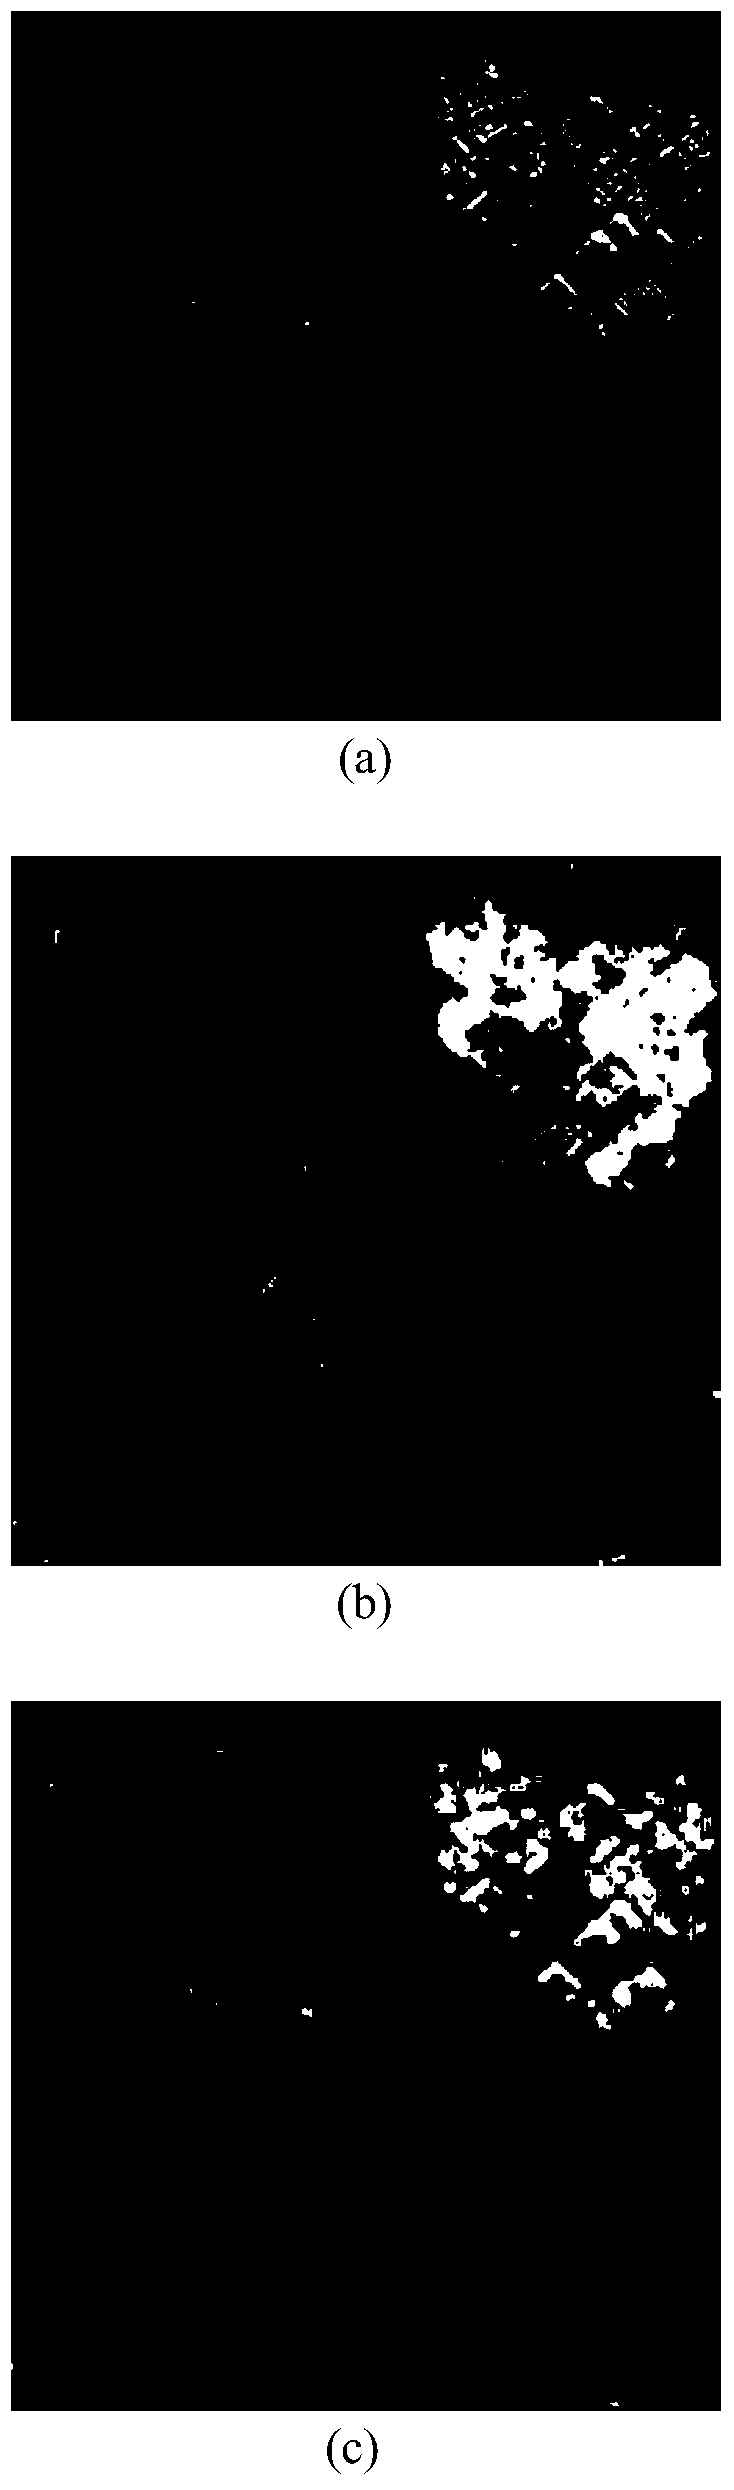 SAR image classification method based on shrinkage autoencoder